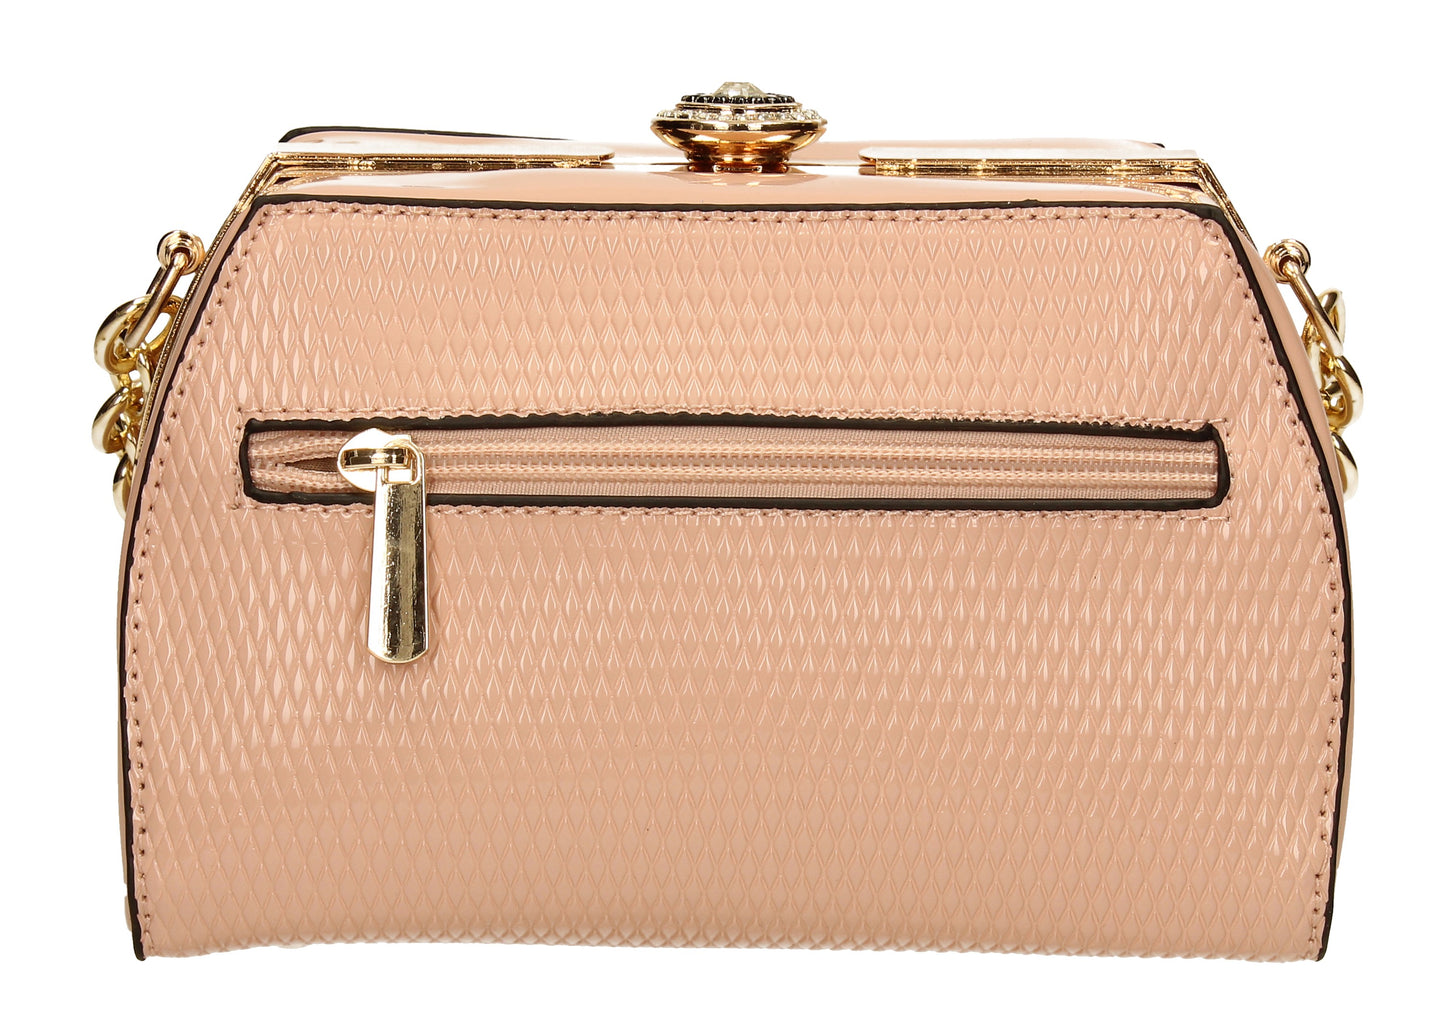 SWANKYSWANS Jayne Patent Frame Clutch Bag Pink Cute Cheap Clutch Bag For Weddings School and Work